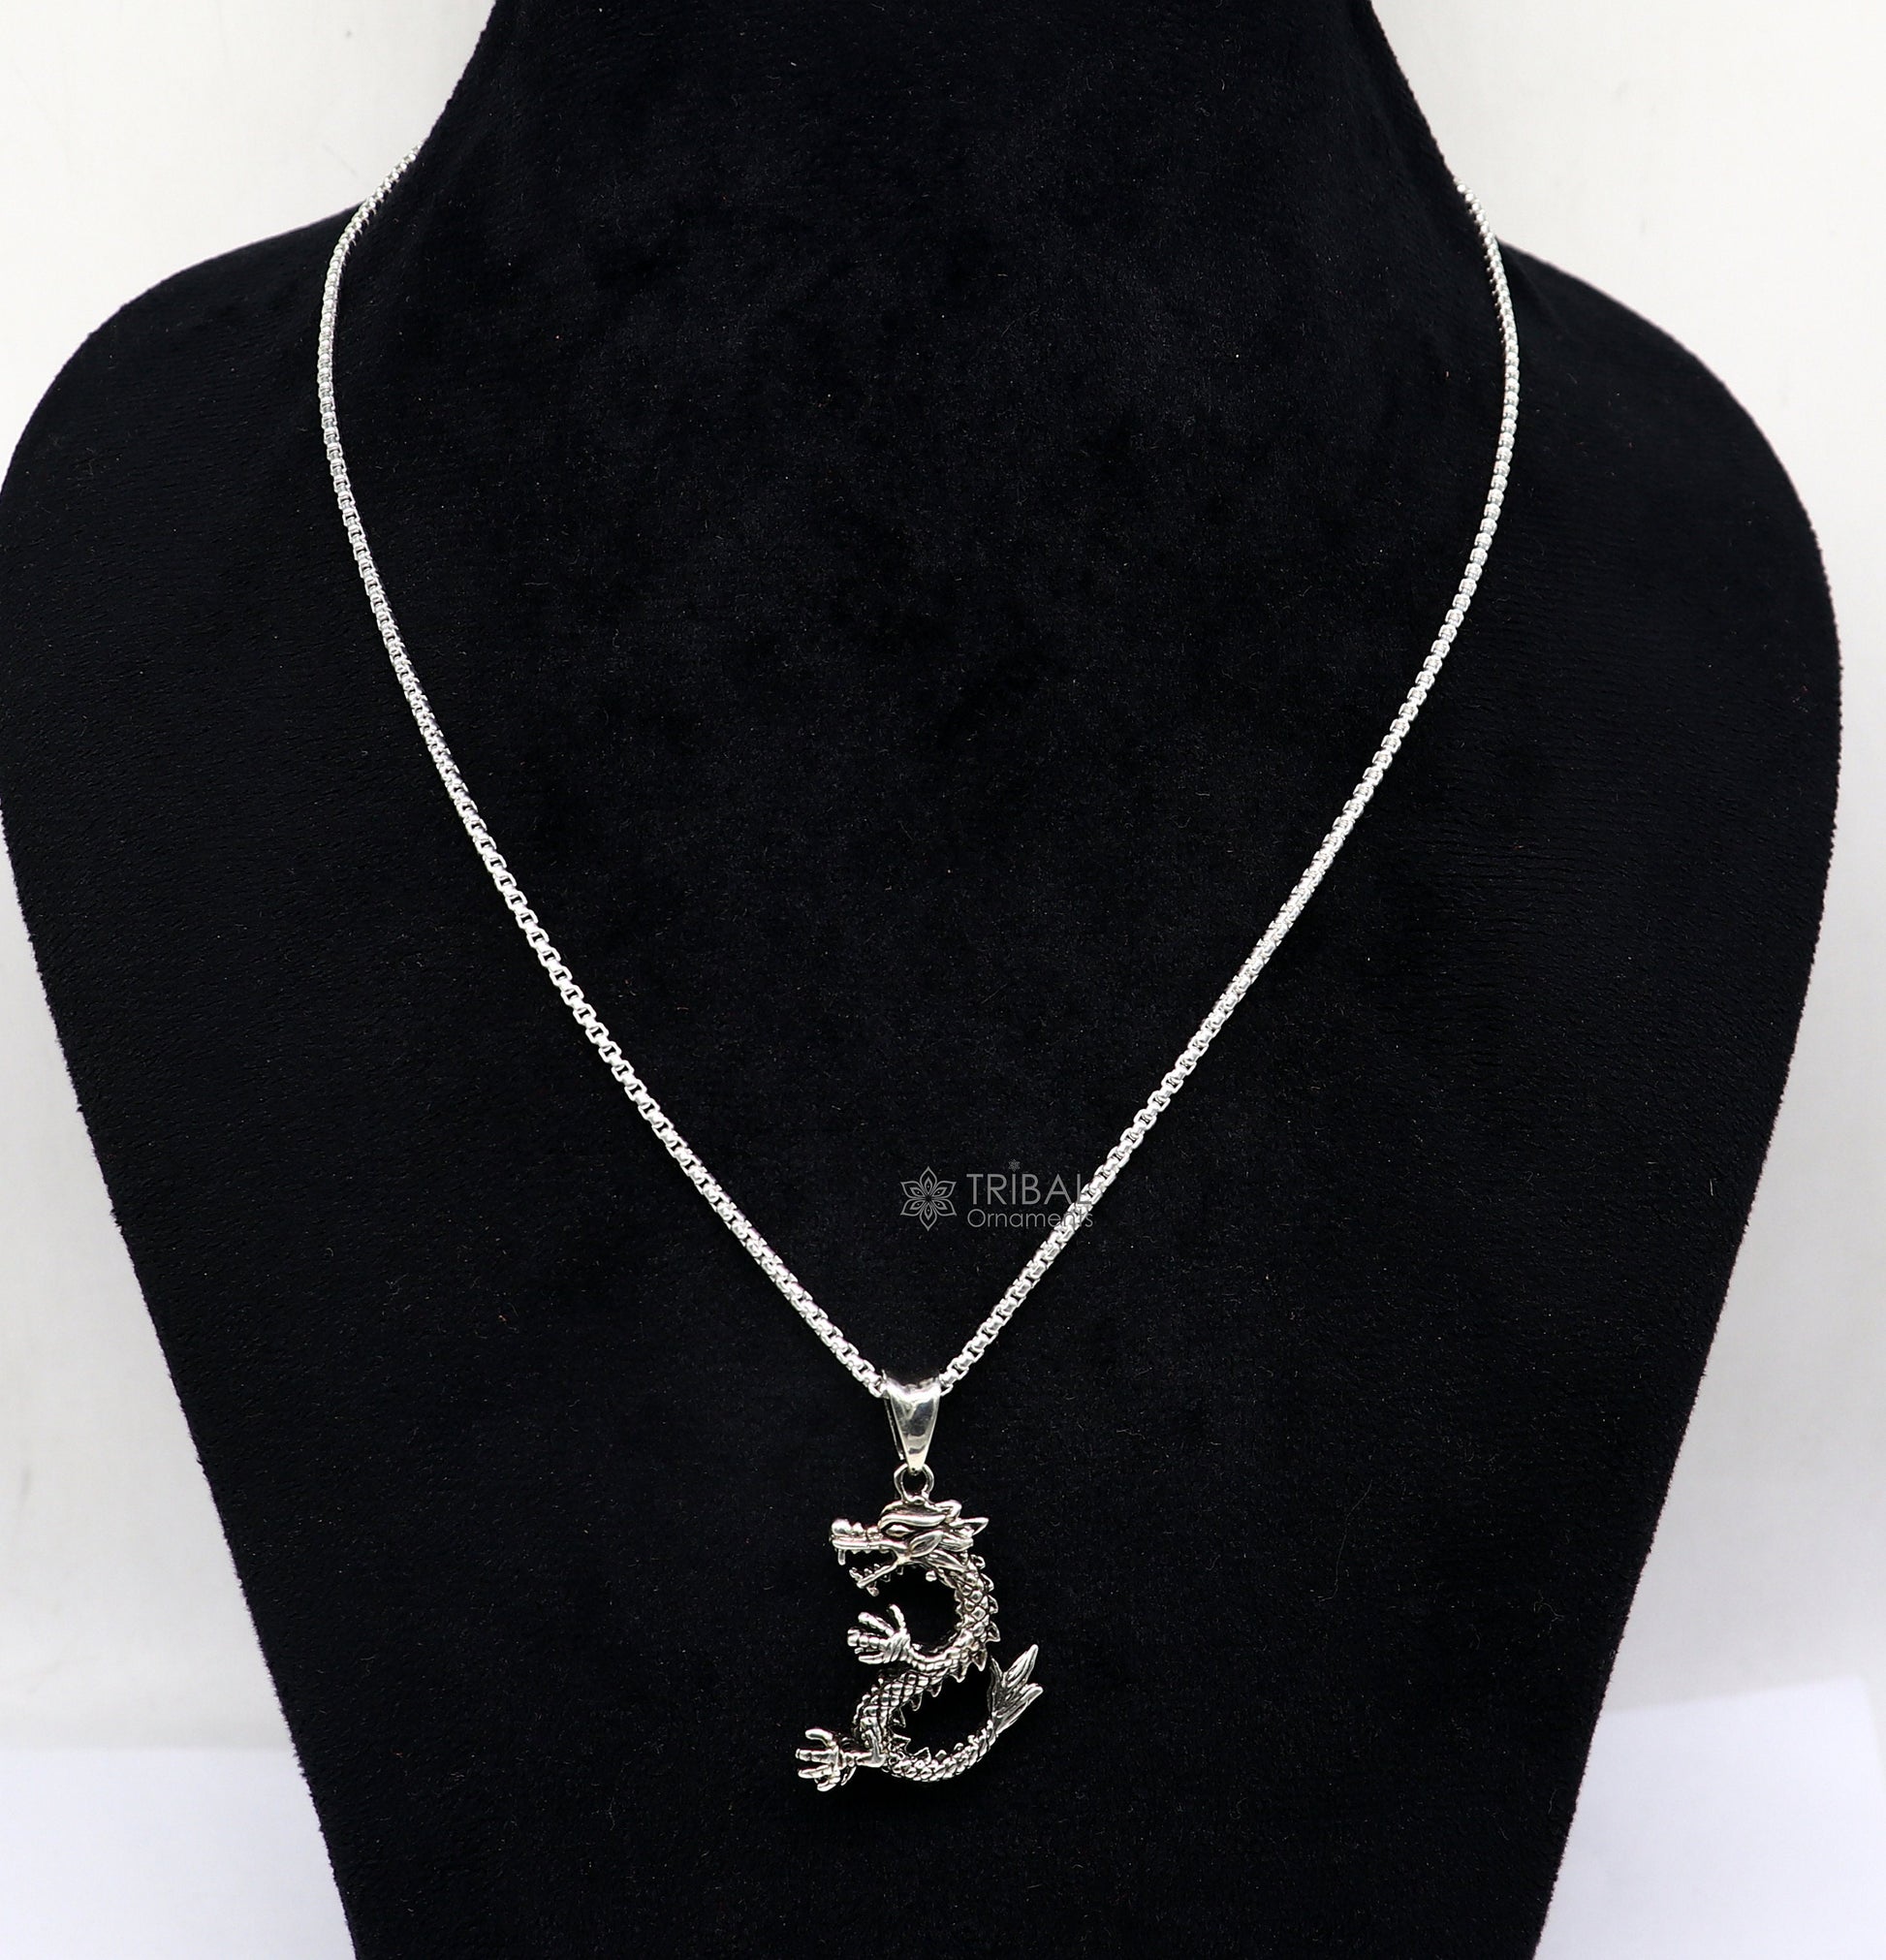 925 sterling silver unique Dragon design pendant, silver trendy pendant necklace, silver unisex cultural designer jewelry nsp642 - TRIBAL ORNAMENTS